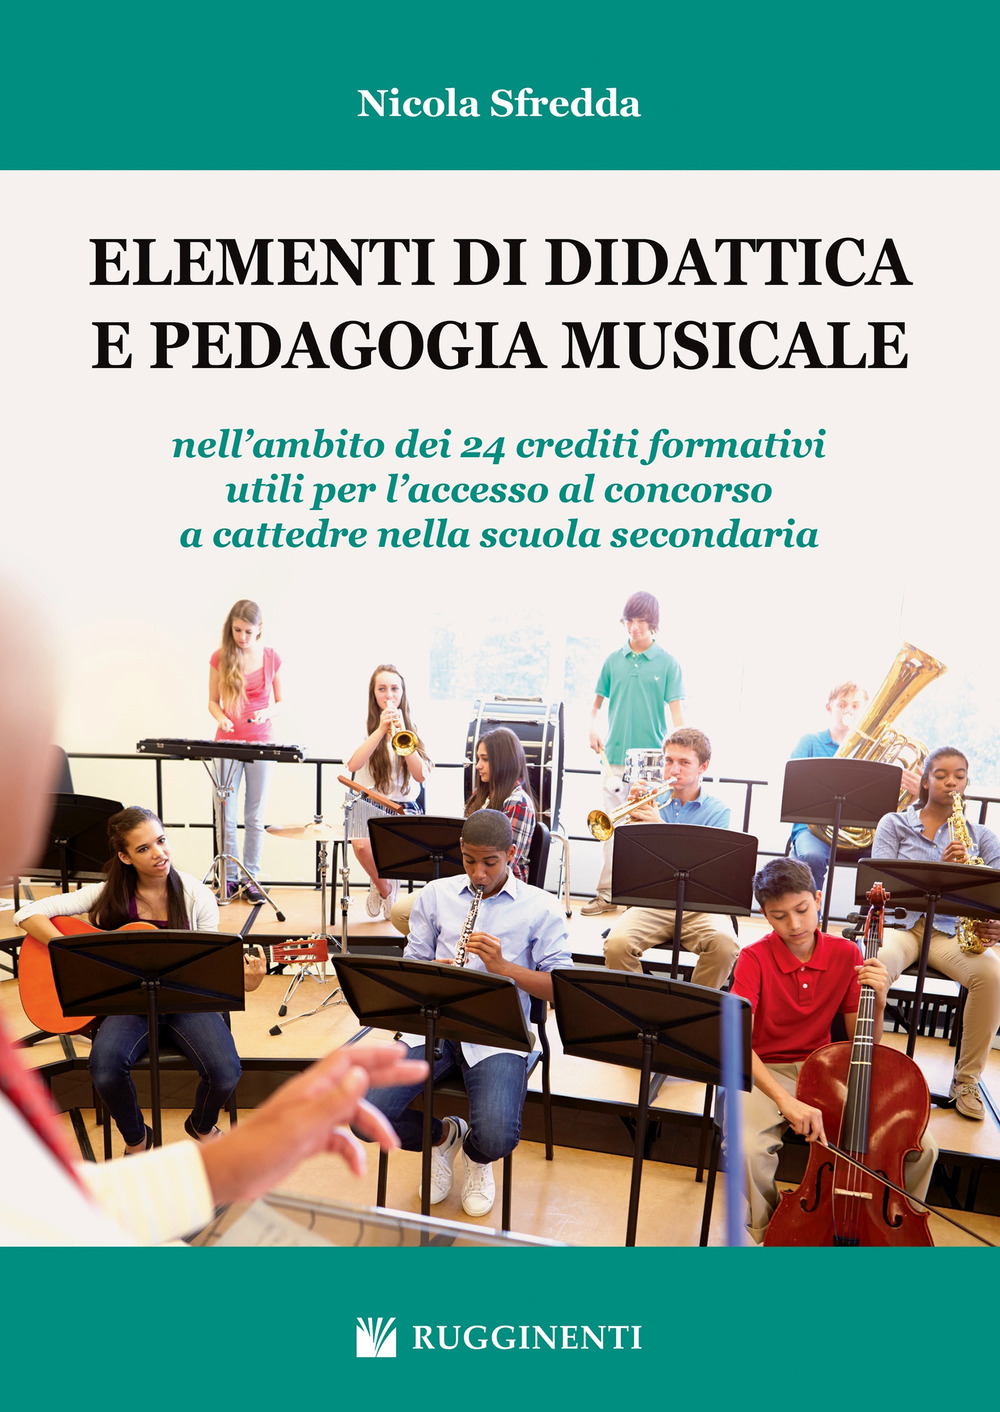 Image of Elementi di didattica pedagogia musicale